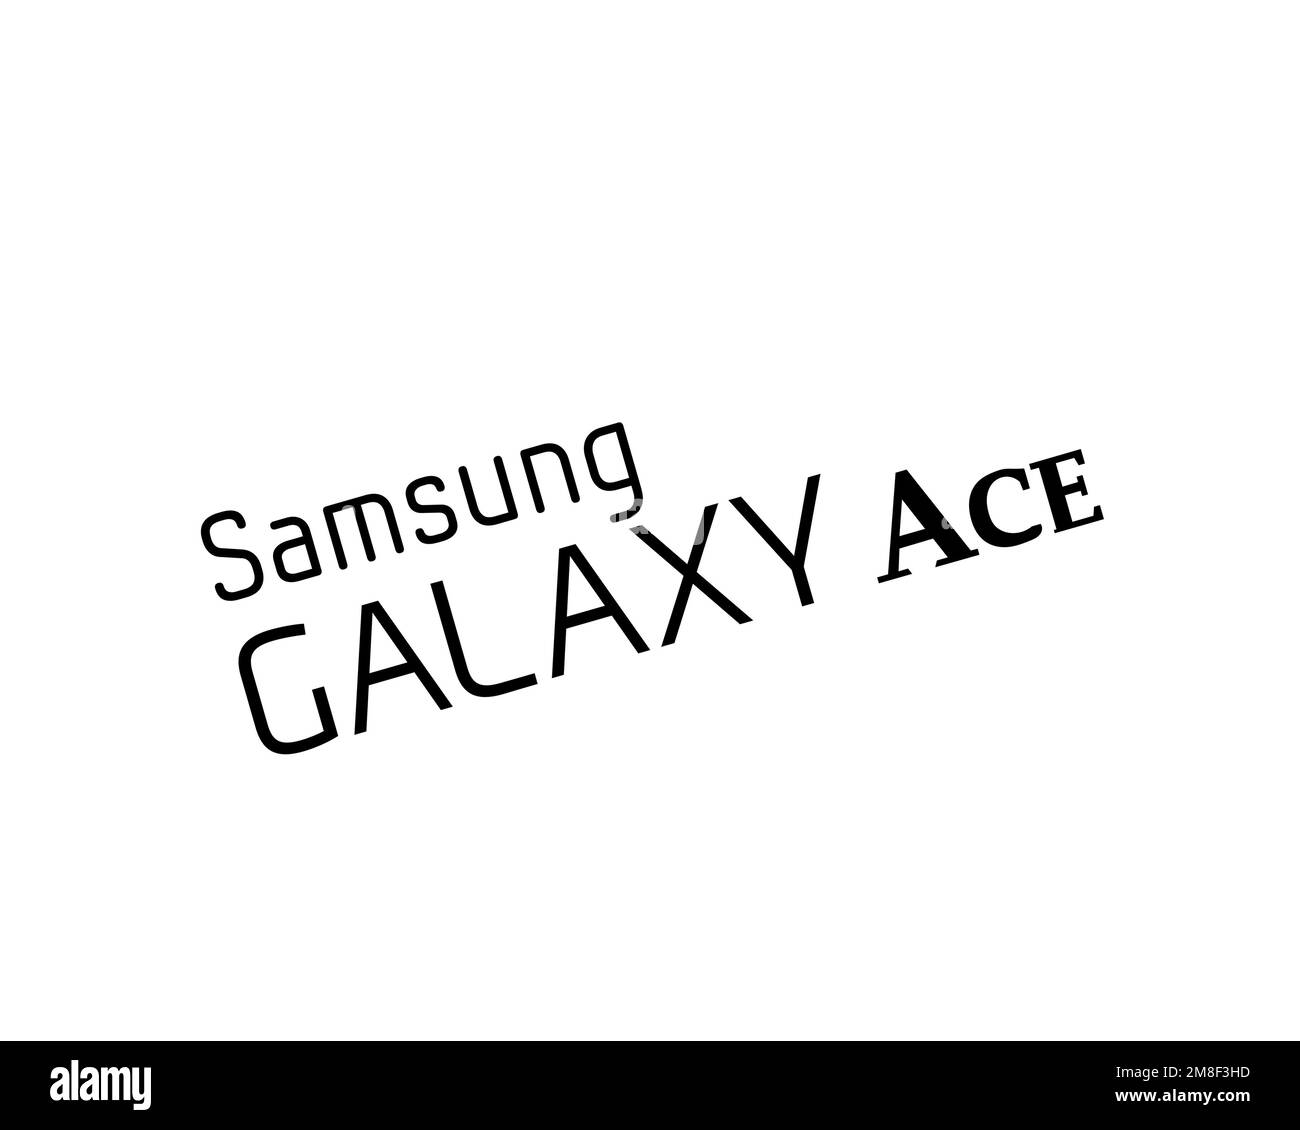 Samsung Galaxy Ace, Rotated Logo, White Background Stock Photo